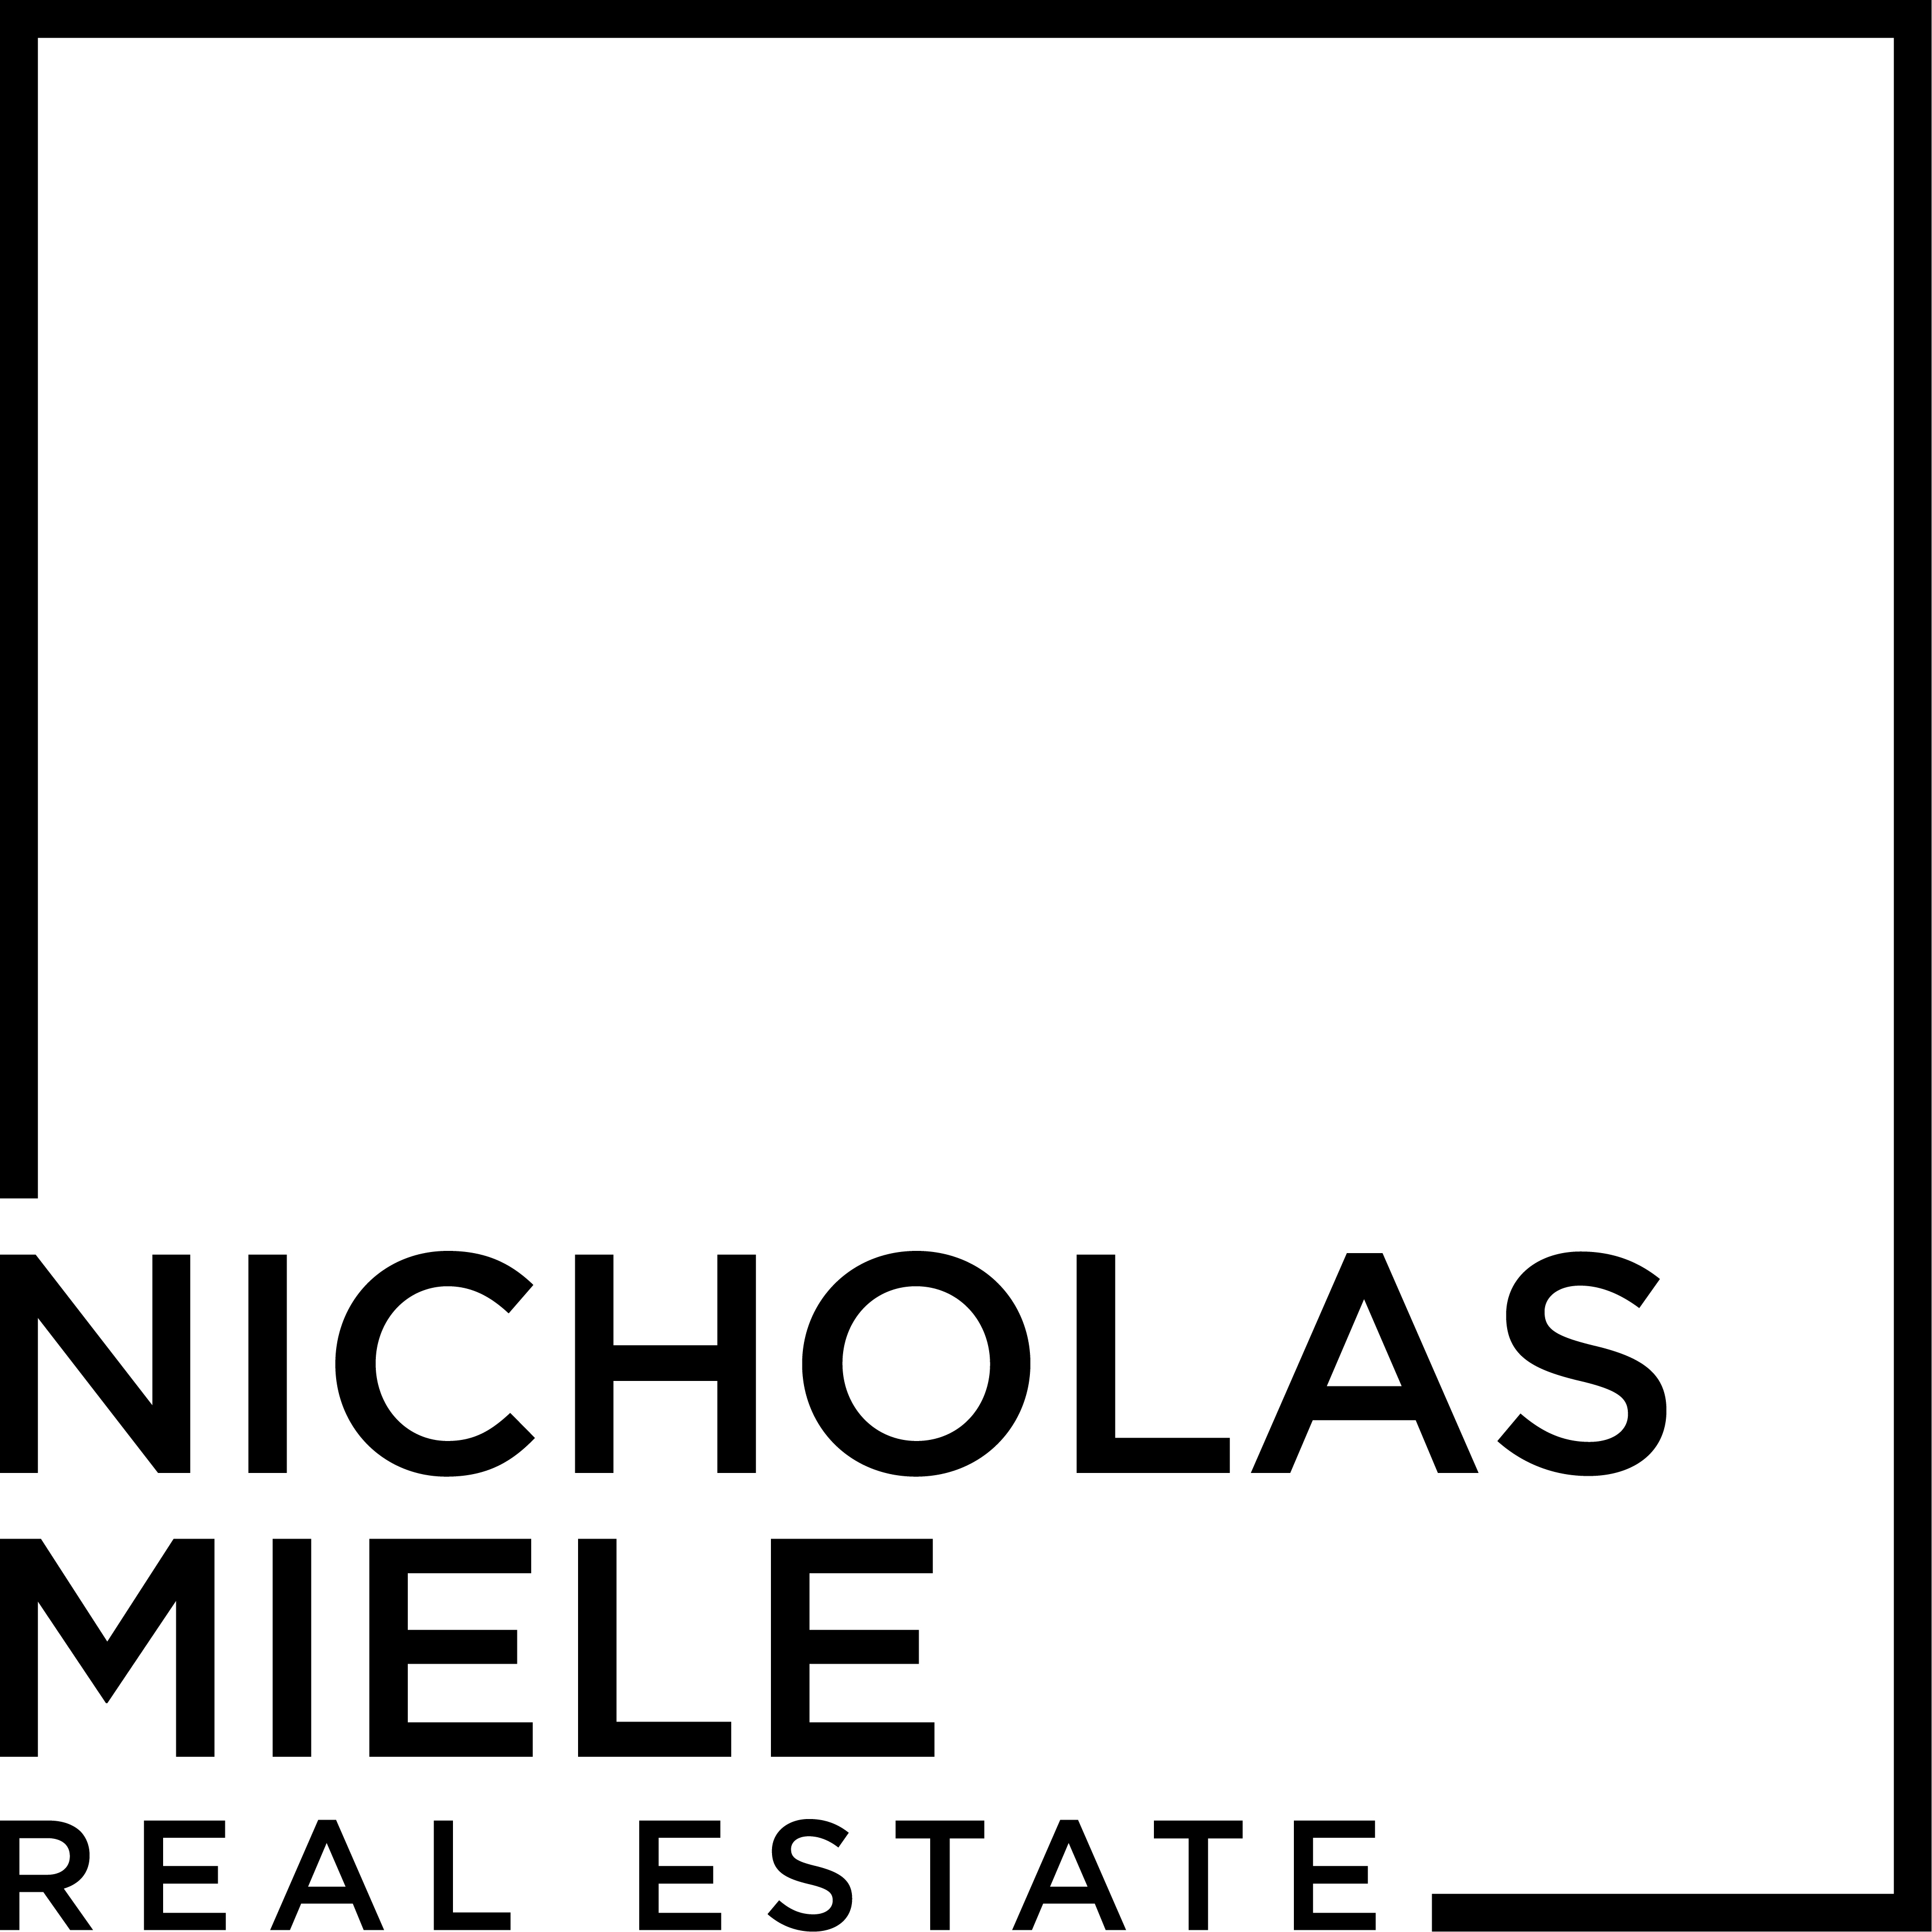 The logo of Nicholas